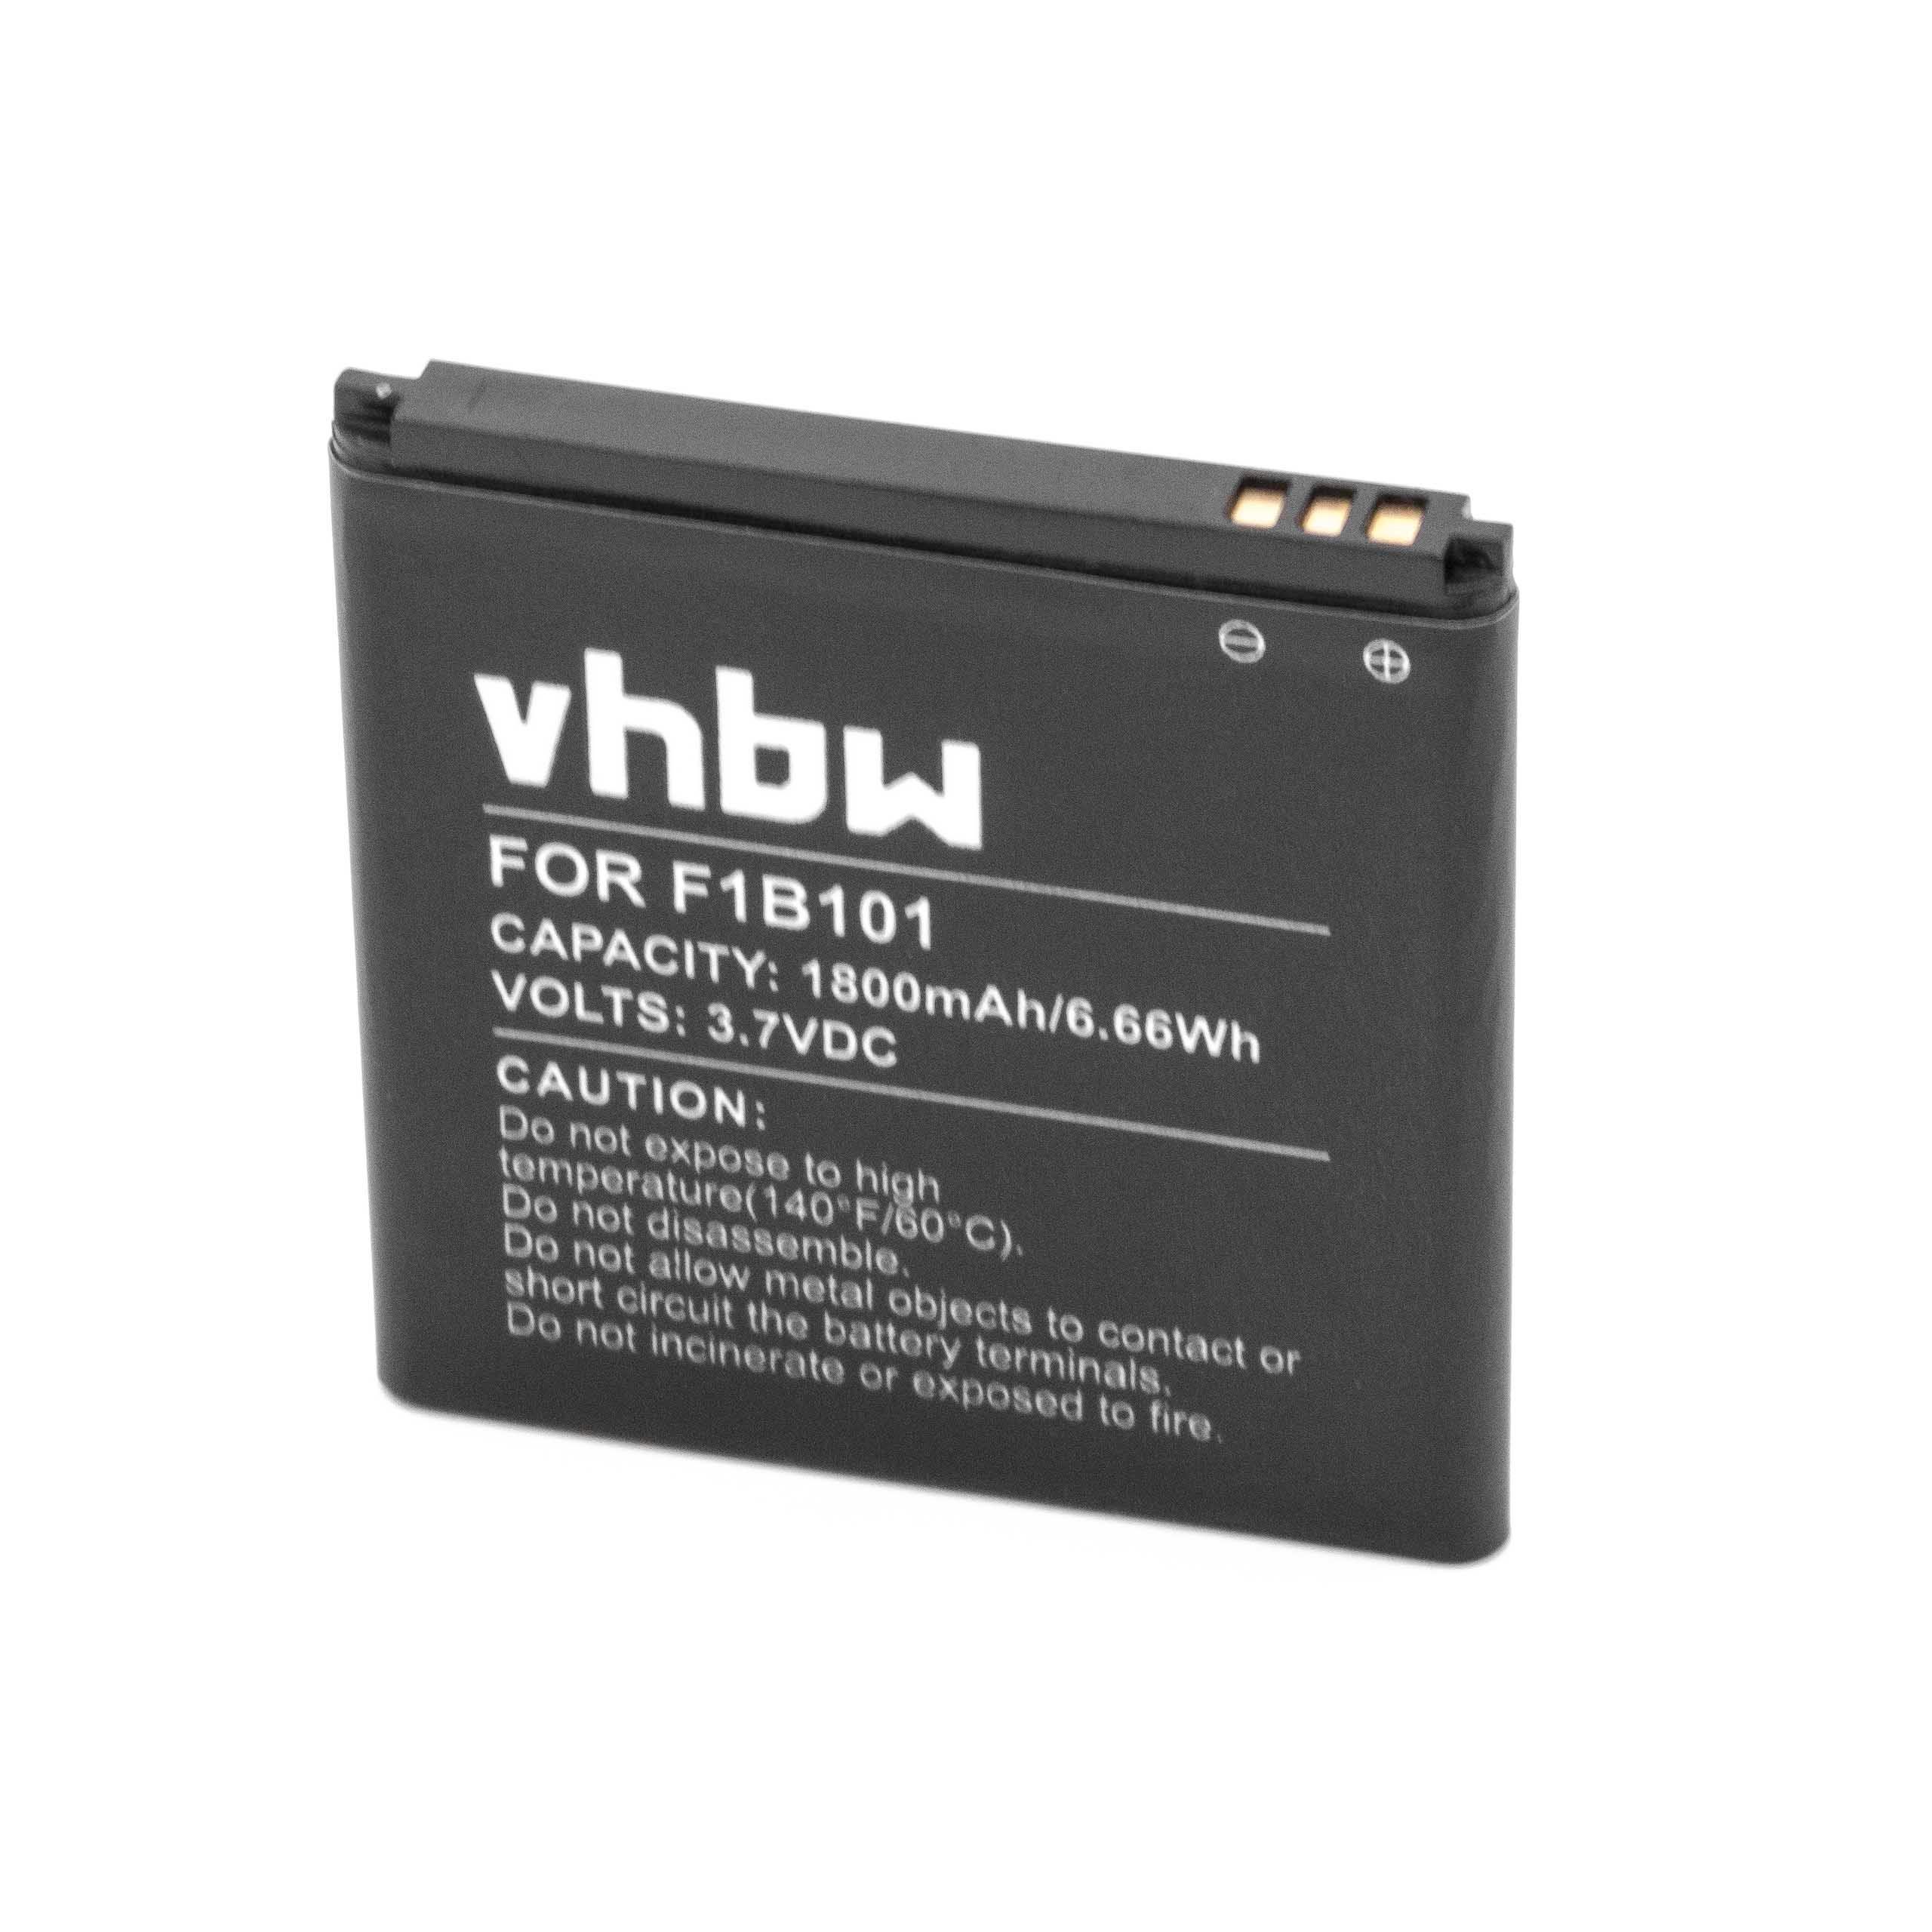 Mobile Phone Battery Replacement for Fairphone F1B201, F1B101 - 1800mAh 3.7V Li-Ion